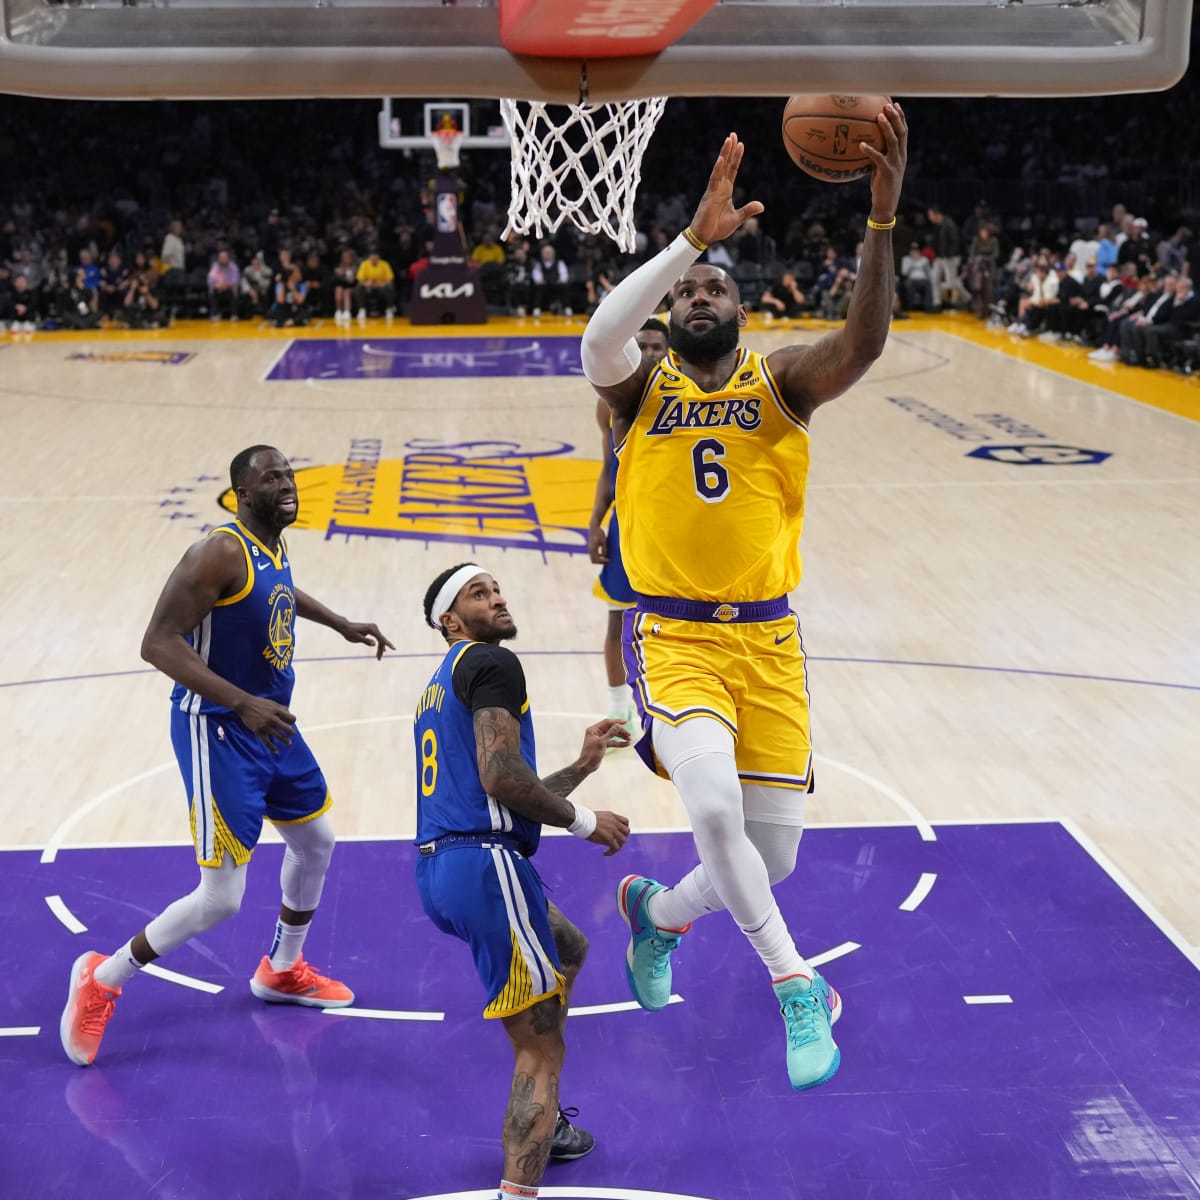 Lakers rumors: LeBron James' coach on hot seat as Warriors keep